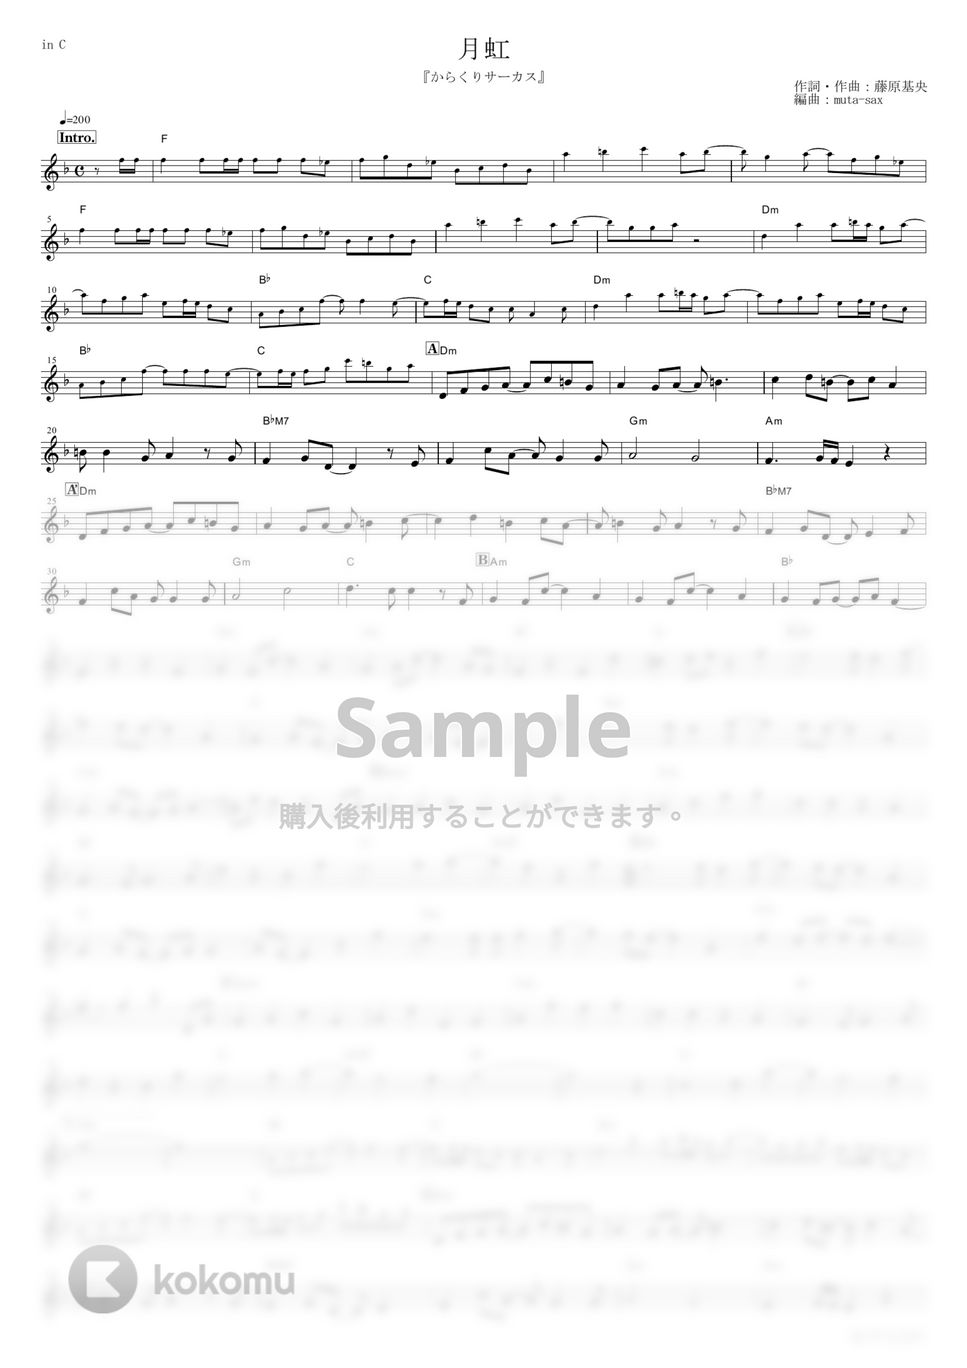 BUMP OF CHICKEN - 月虹 (『からくりサーカス』 / in C) by muta-sax